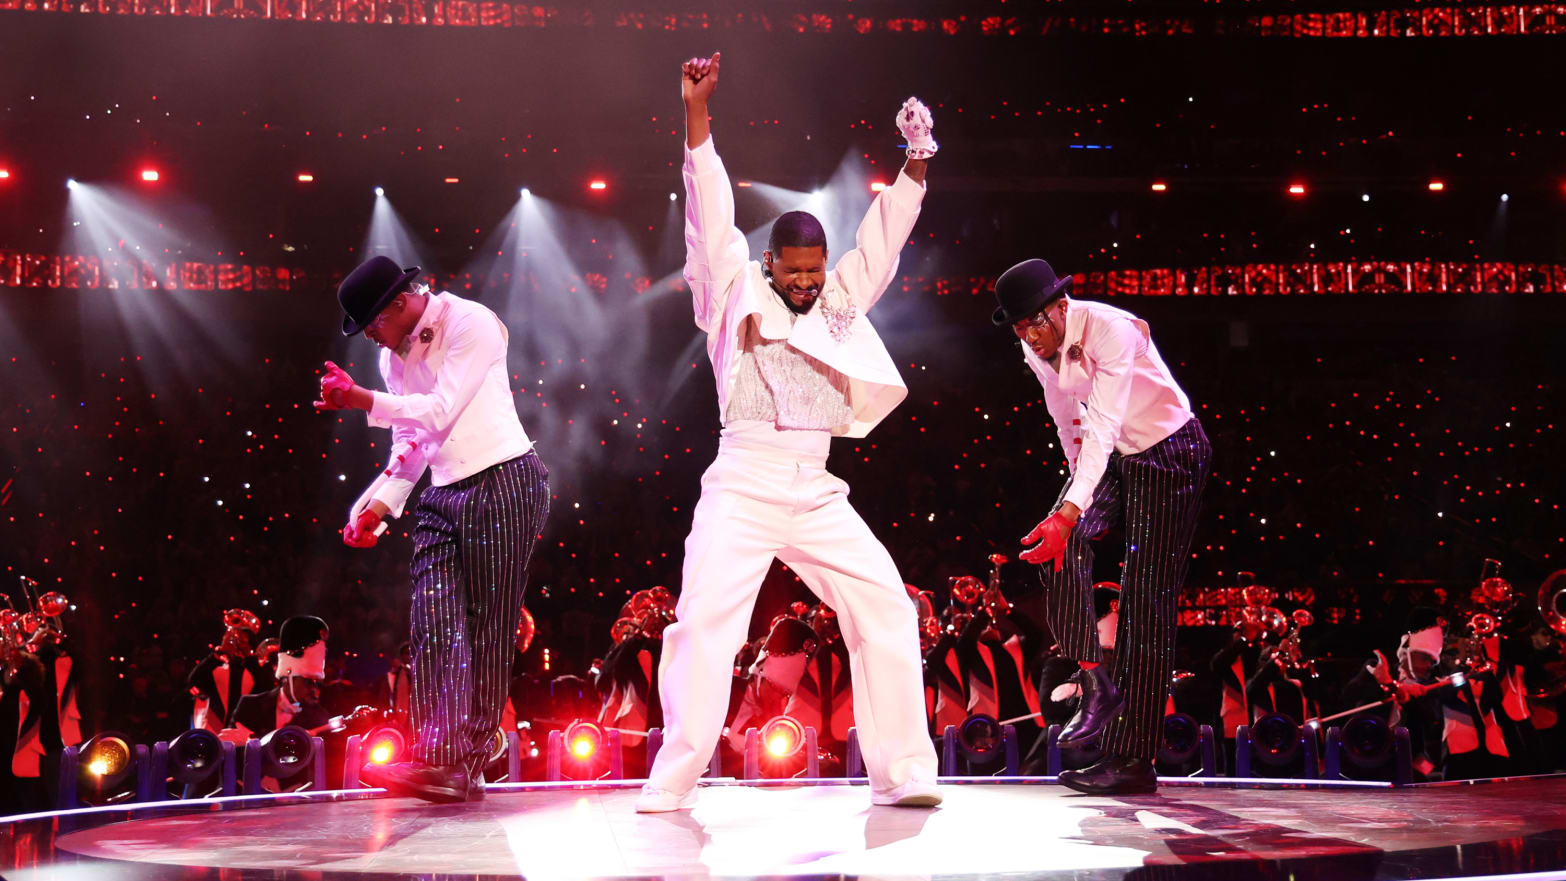 Photo of Usher dancing at Super Bowl Halftime Show